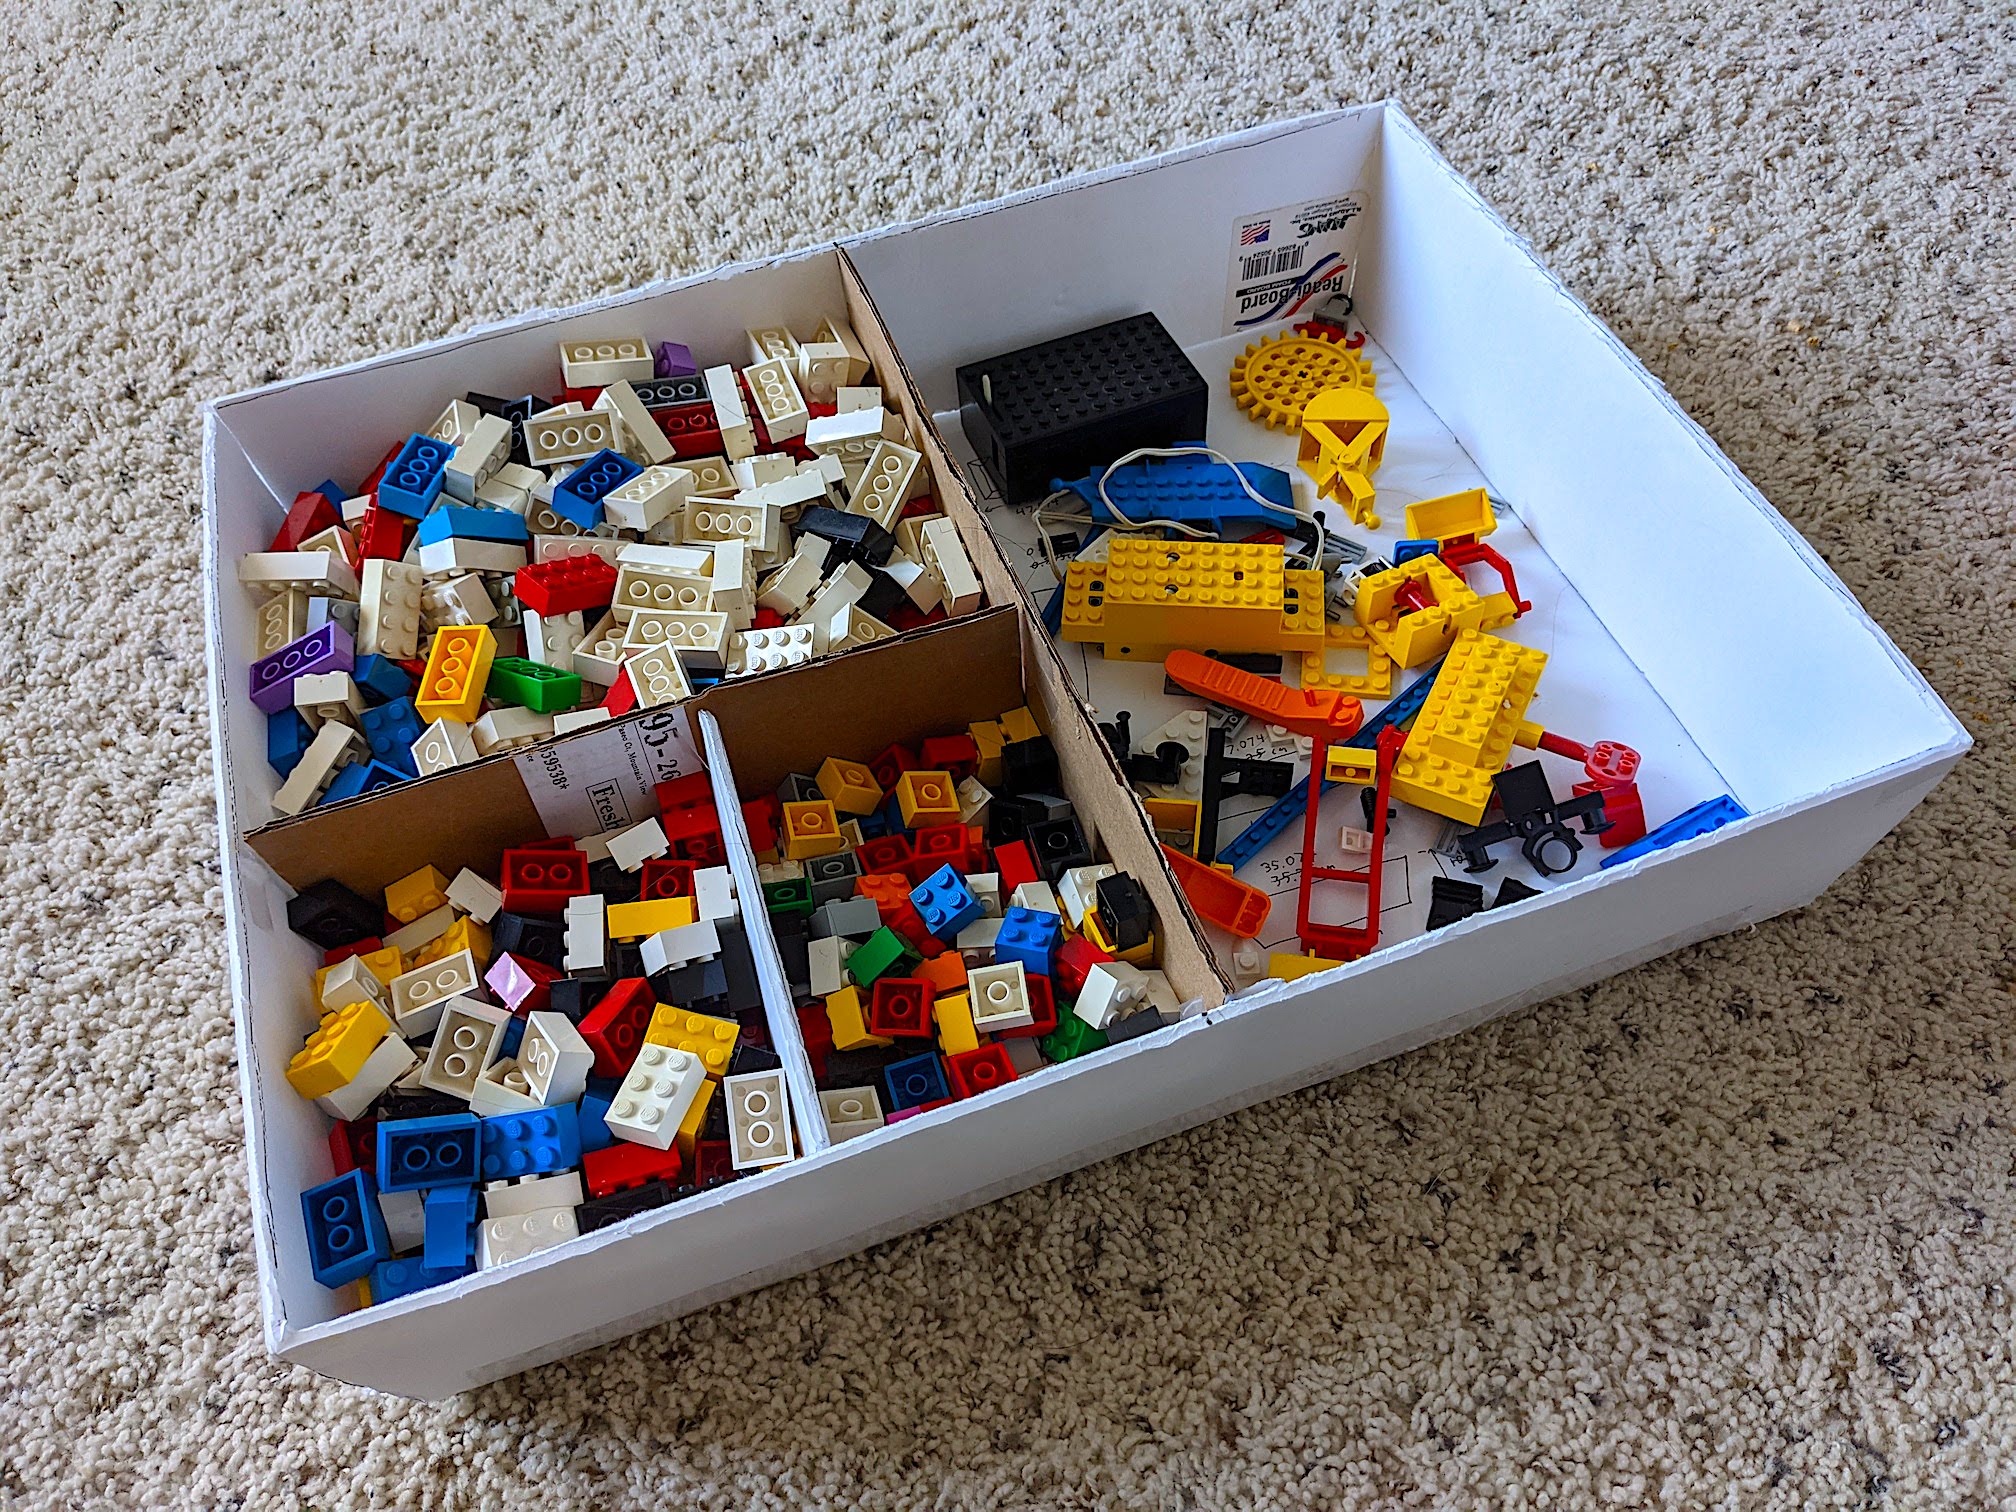 LEGO Storage Set of 4